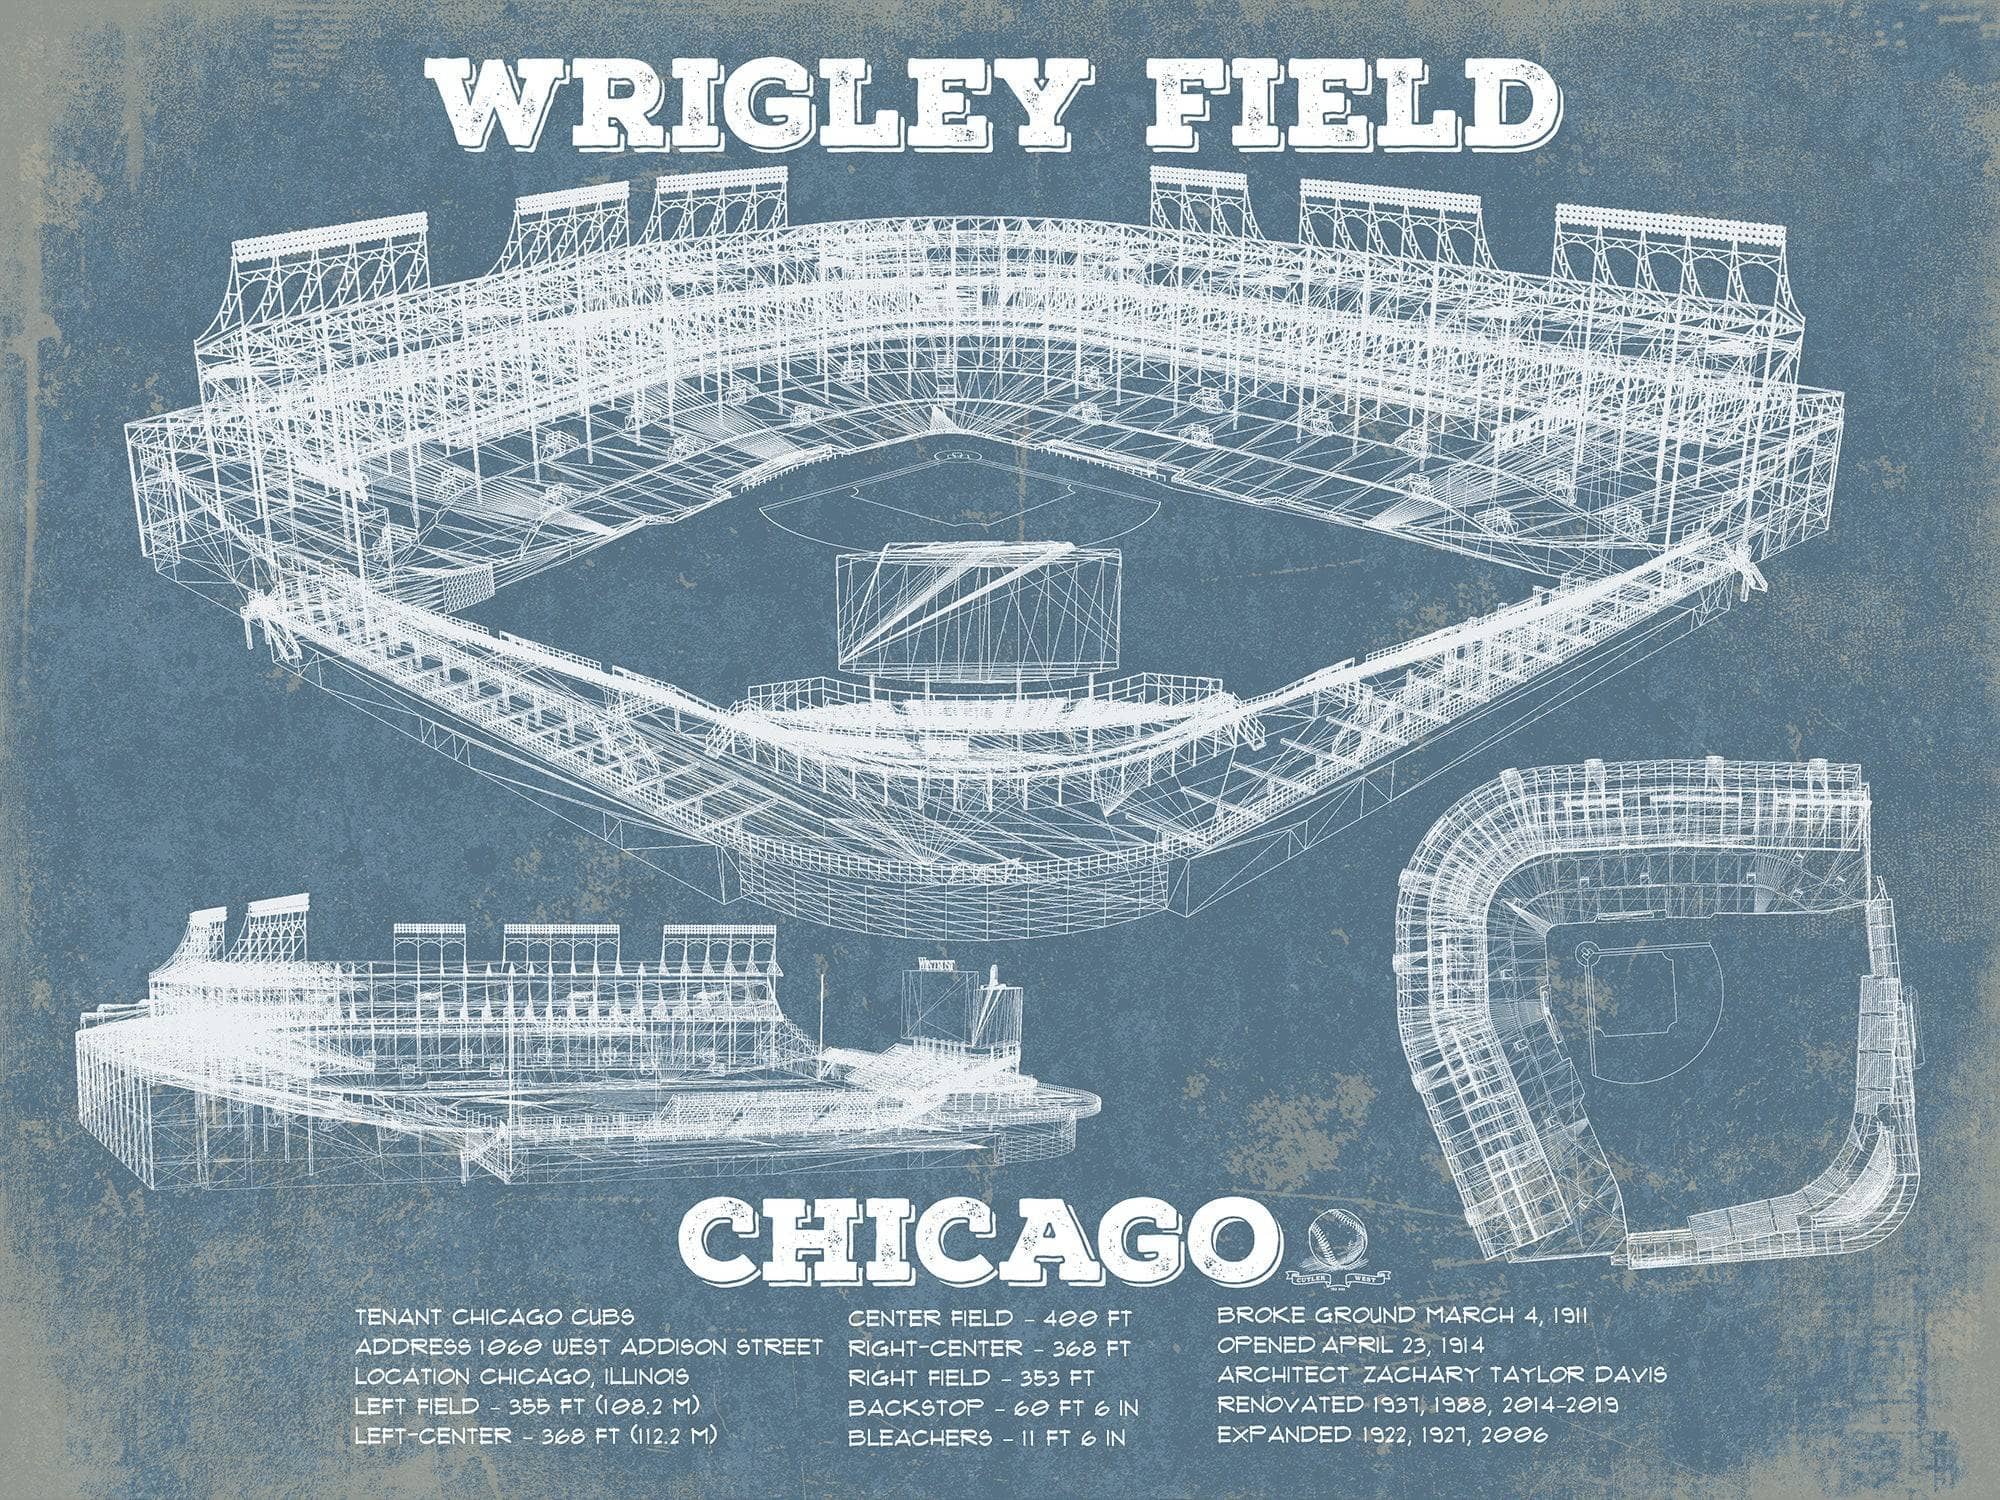 Cutler West Baseball Collection 14" x 11" / Unframed Vintage Wrigley Field Print - Chicago Cubs Baseball Print 703108870-TOP